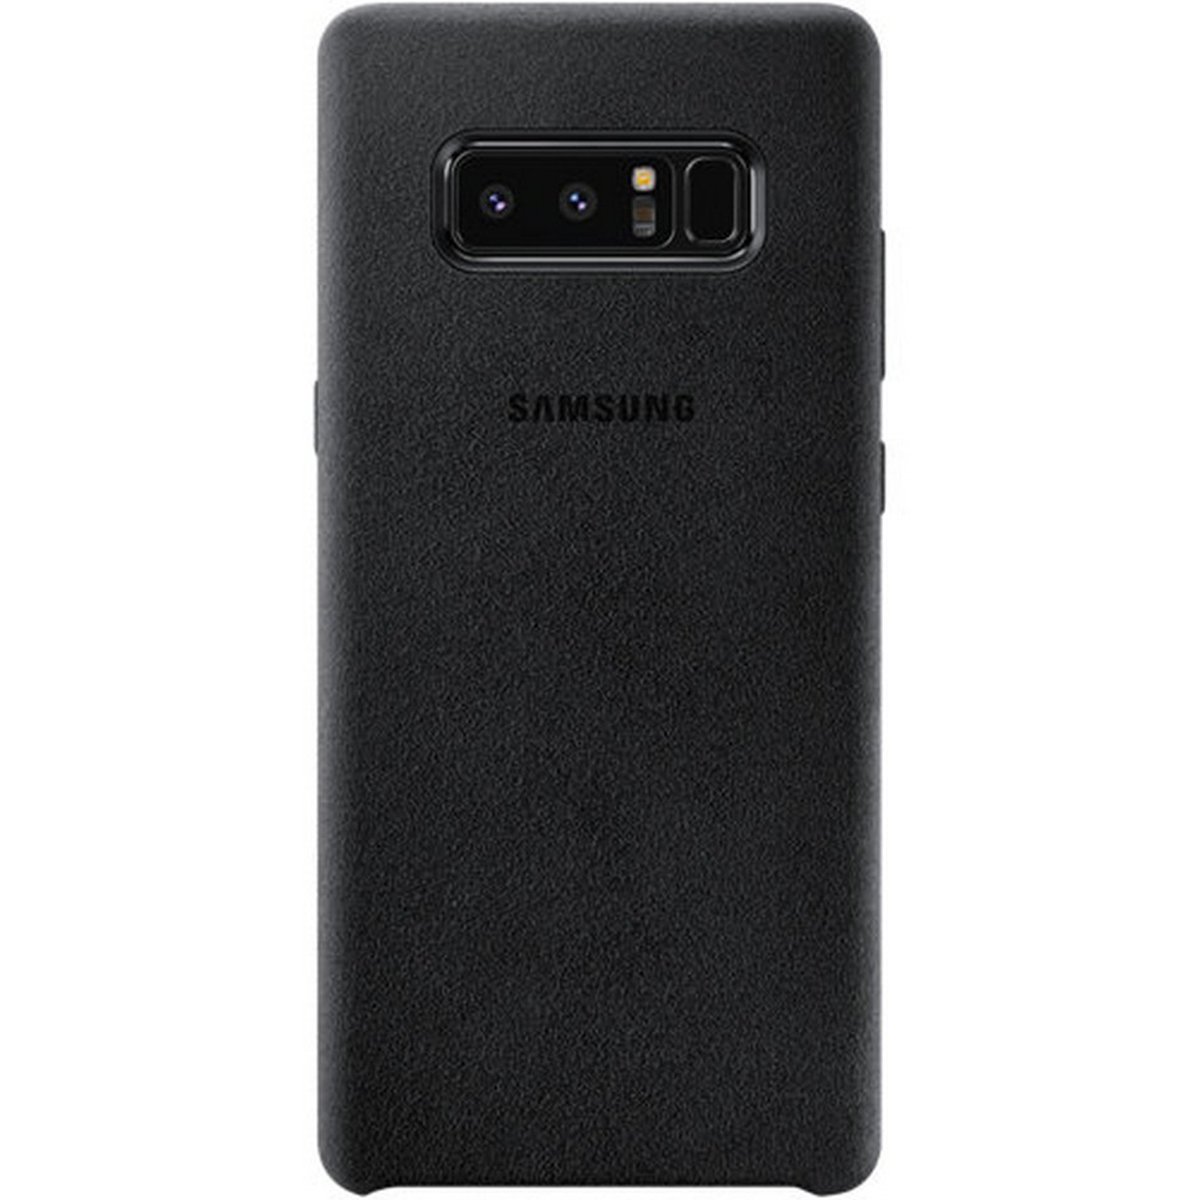 Galaxy Note8 Alcantara Cover XN950 Black